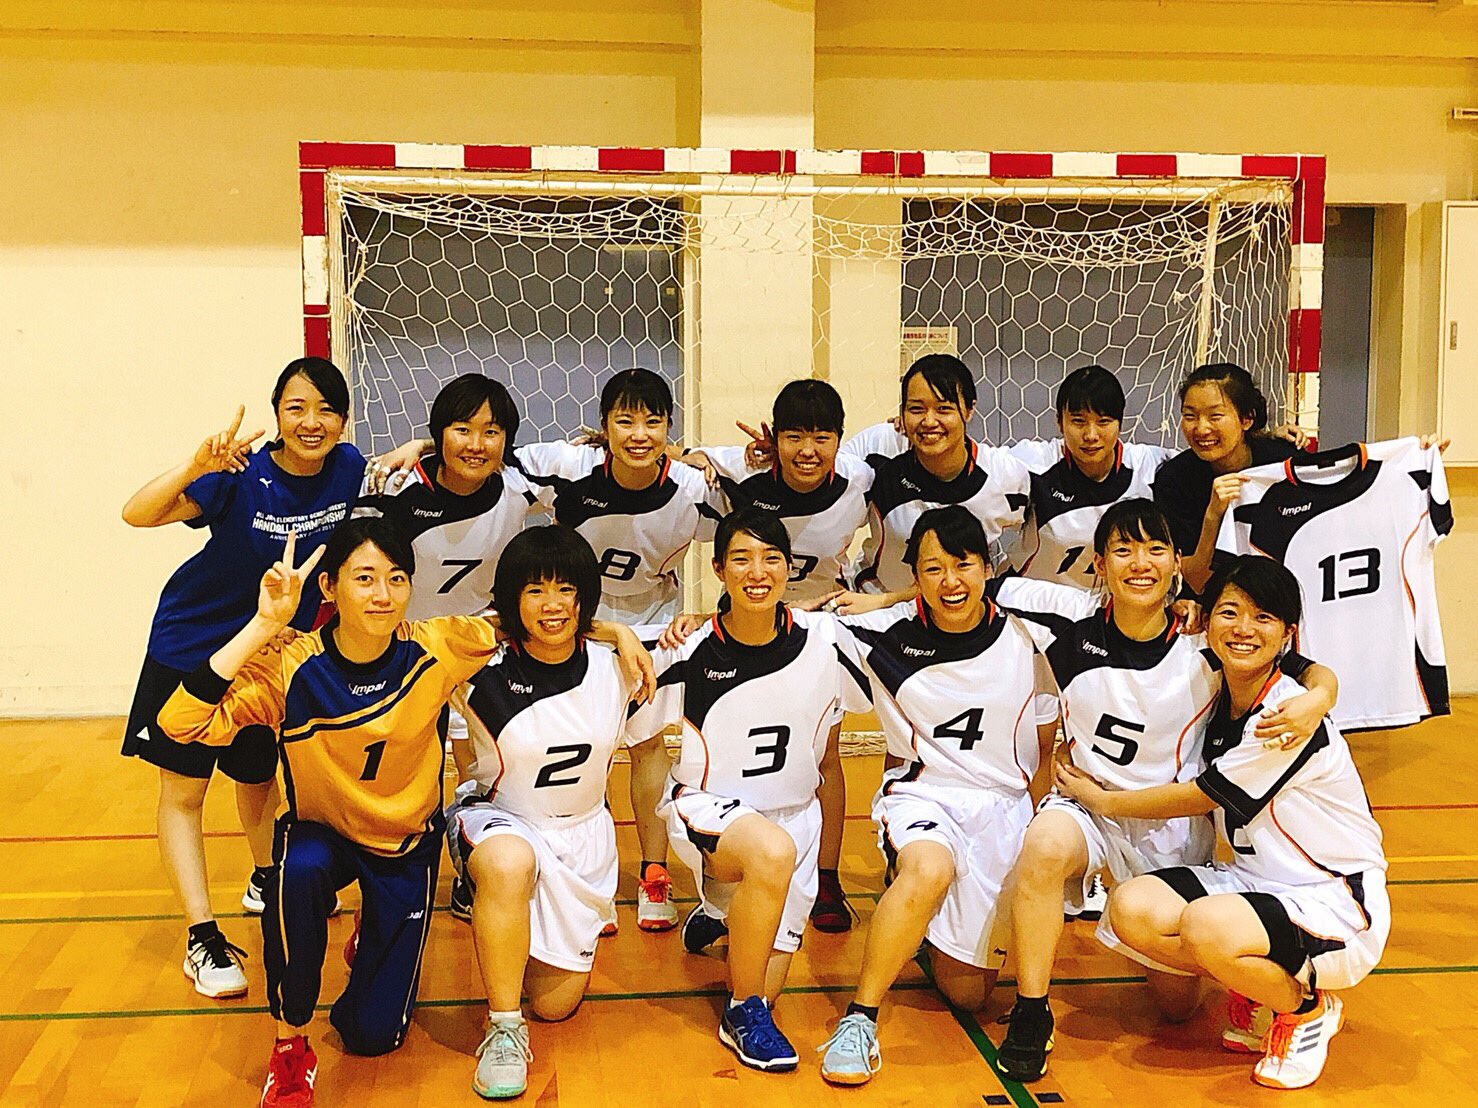 Twitter 上的 京都教育大学女子ハンドボール部 新しいユニフォームです かっこいい T Co Ysdb3uwkgk Twitter